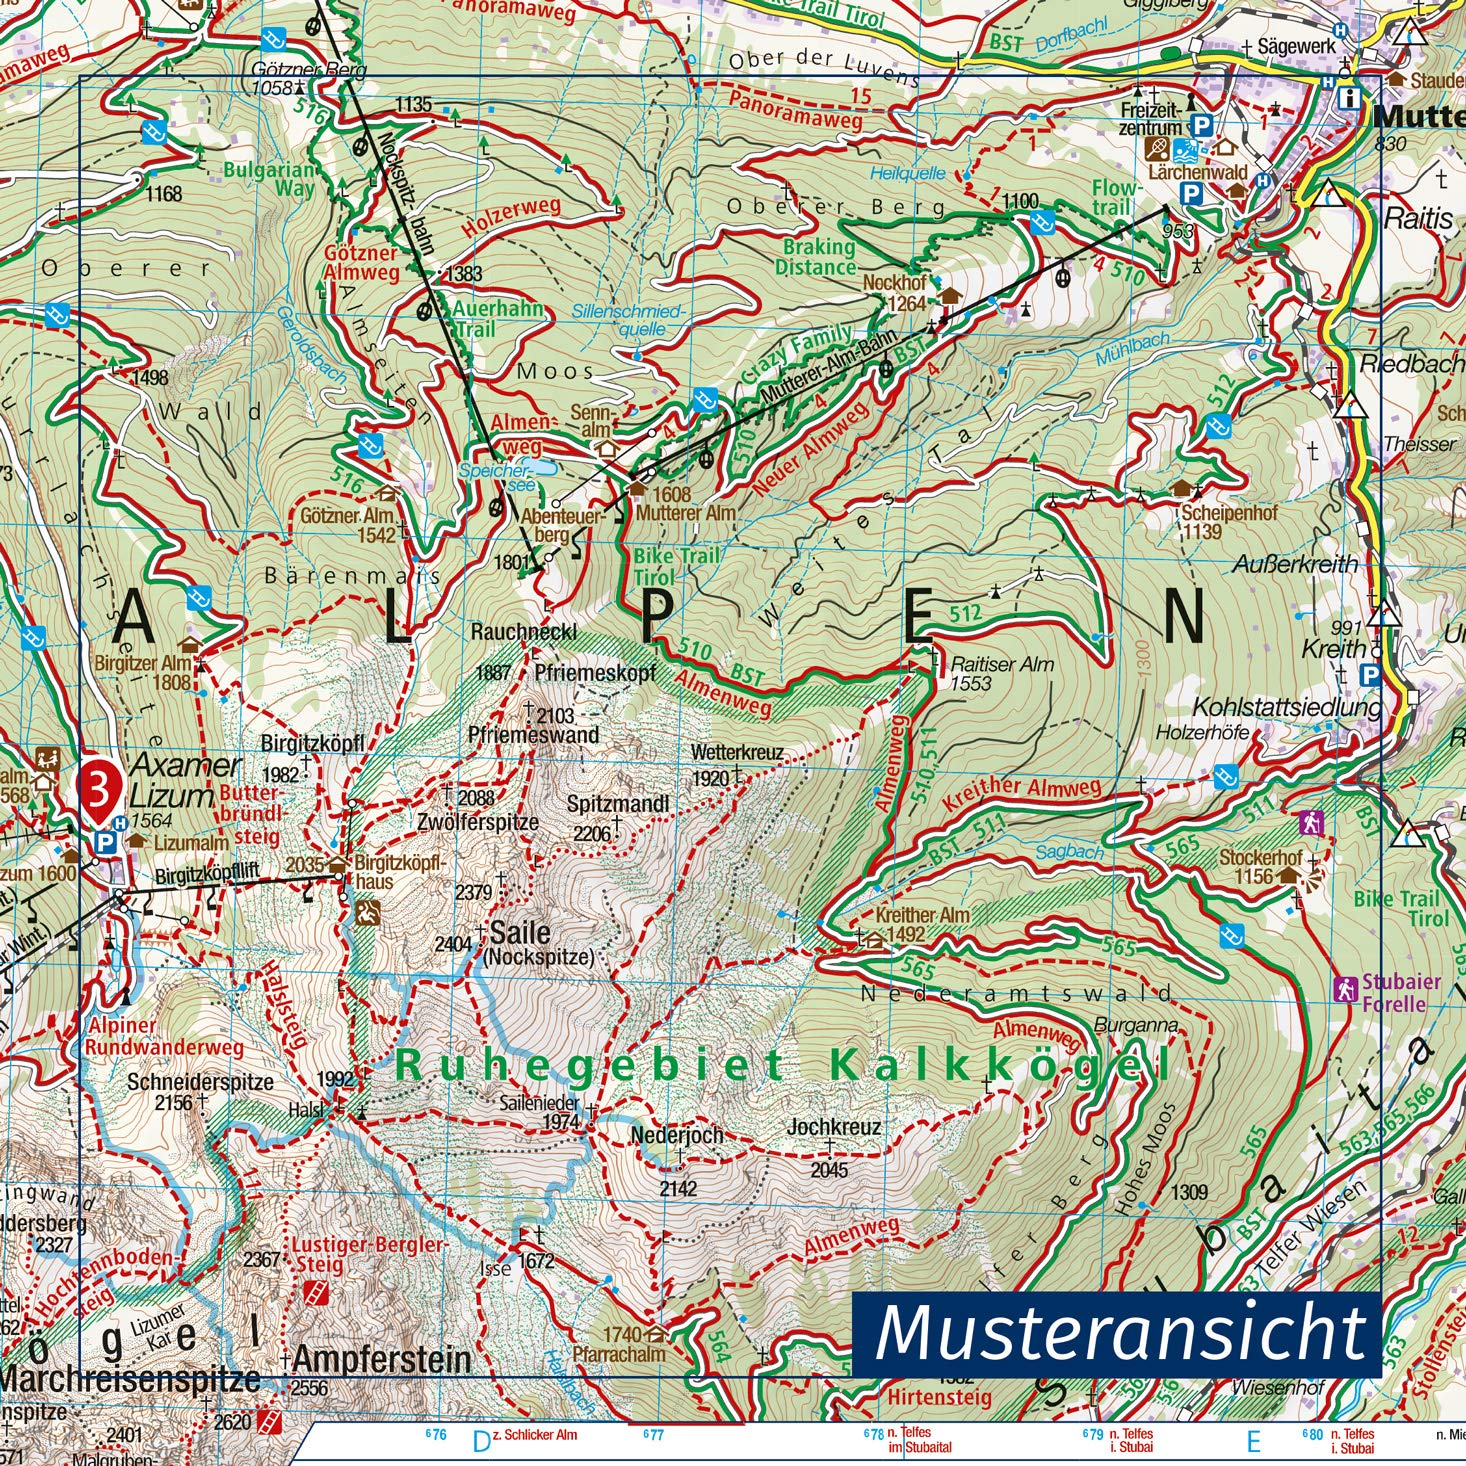 672 Dolomiten, Dolomites, Dolomiti 1:35.000 - Kompass Wanderkarte